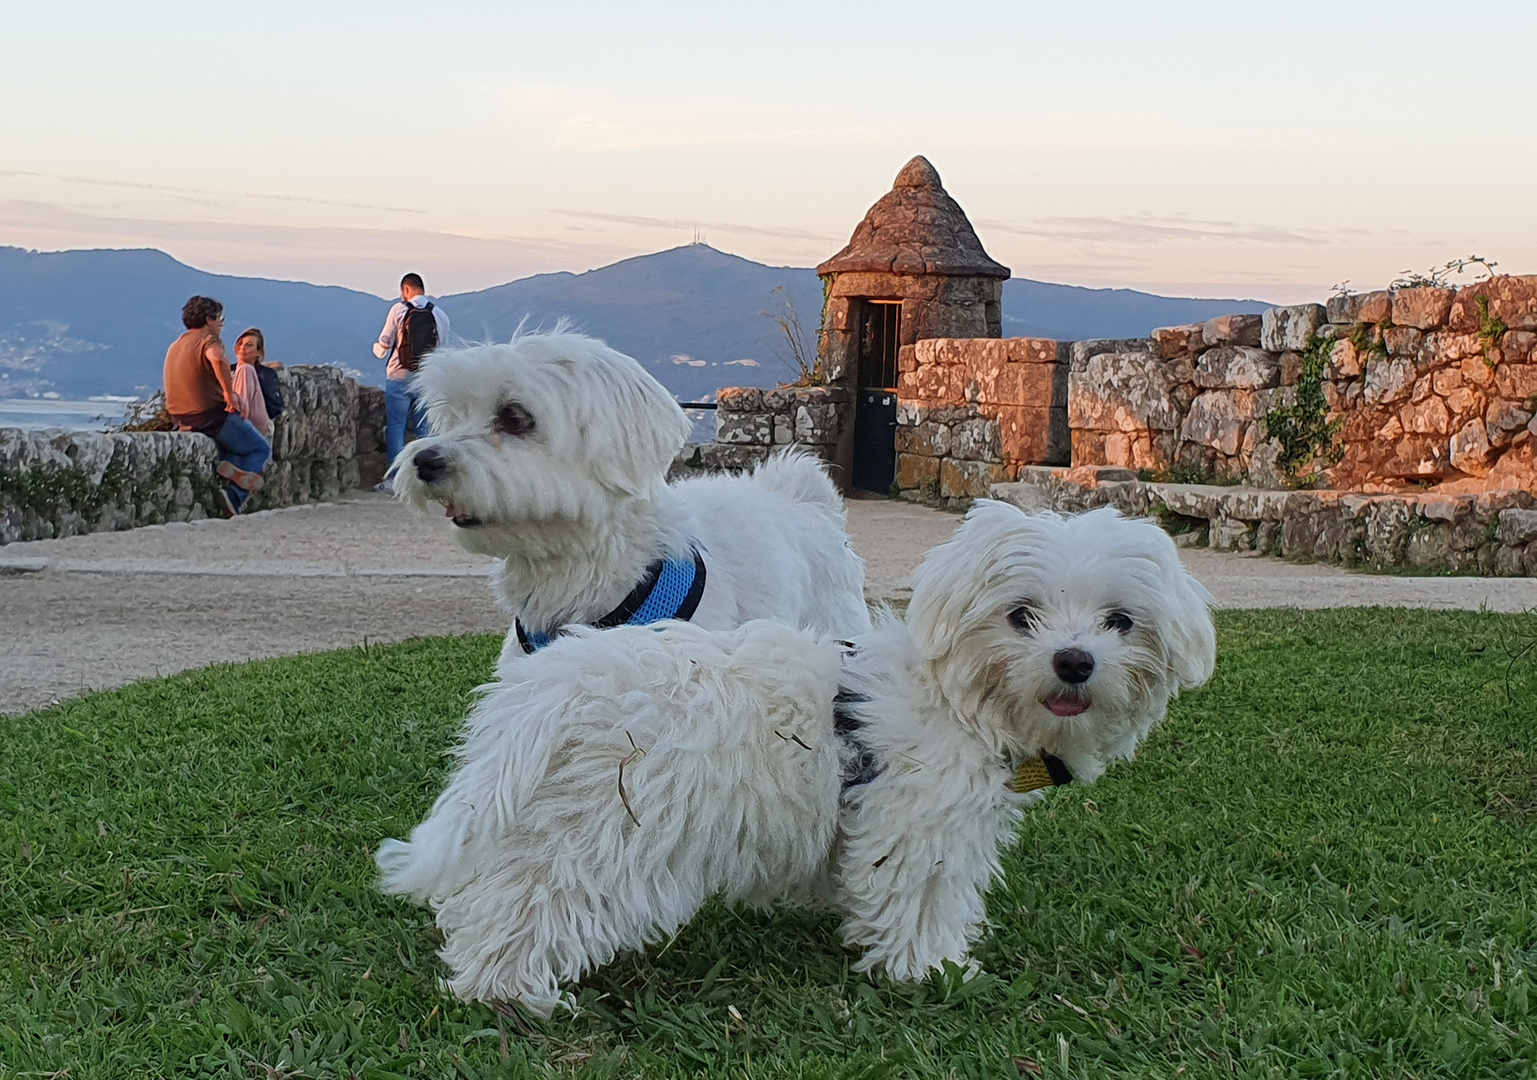 The dogs from Vigo